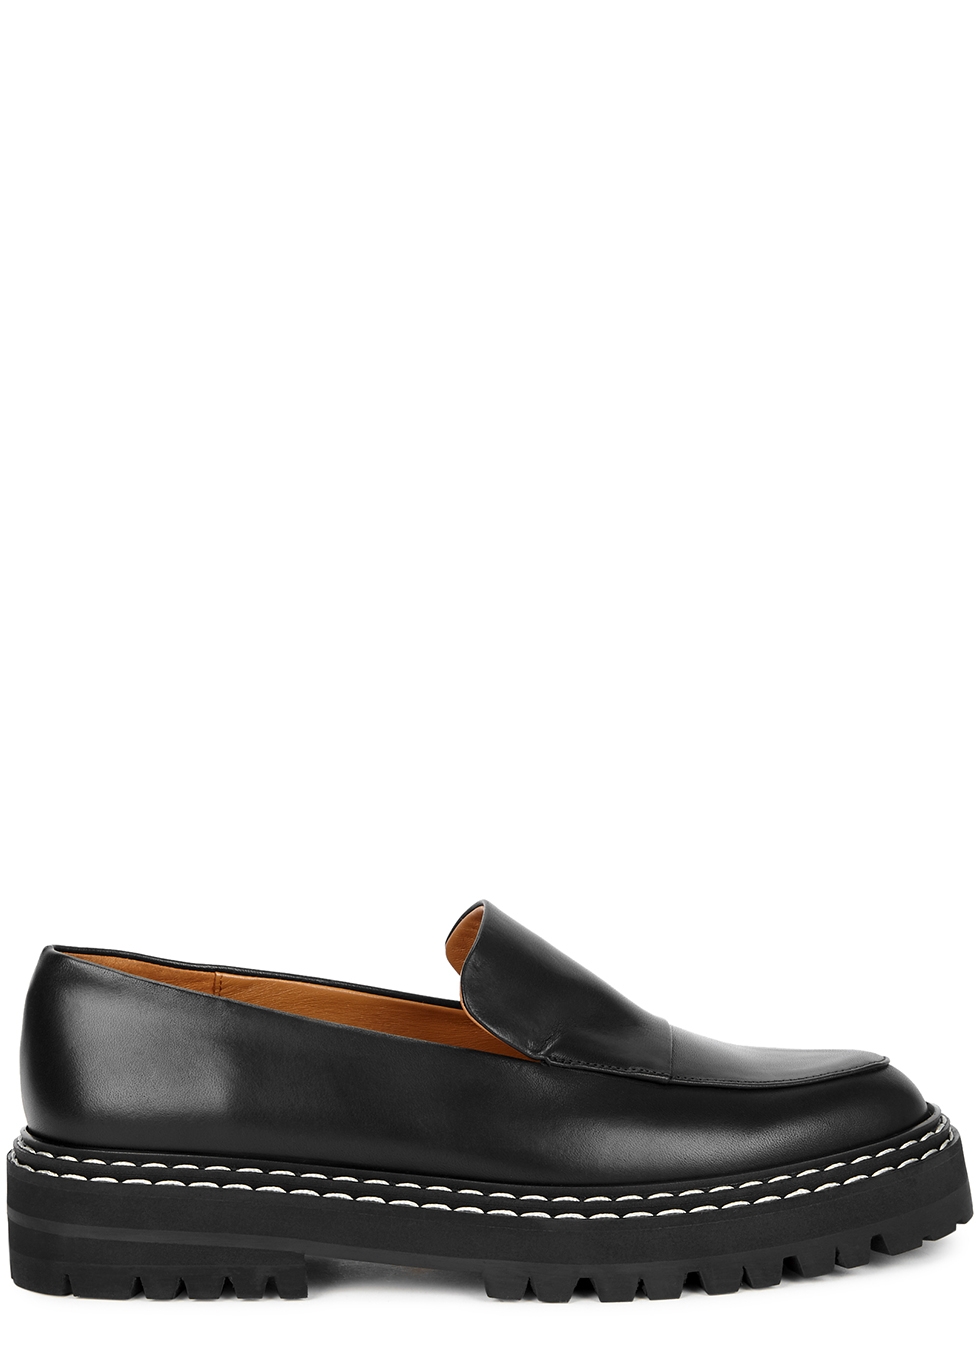 ATP Atelier Manduria black leather loafers